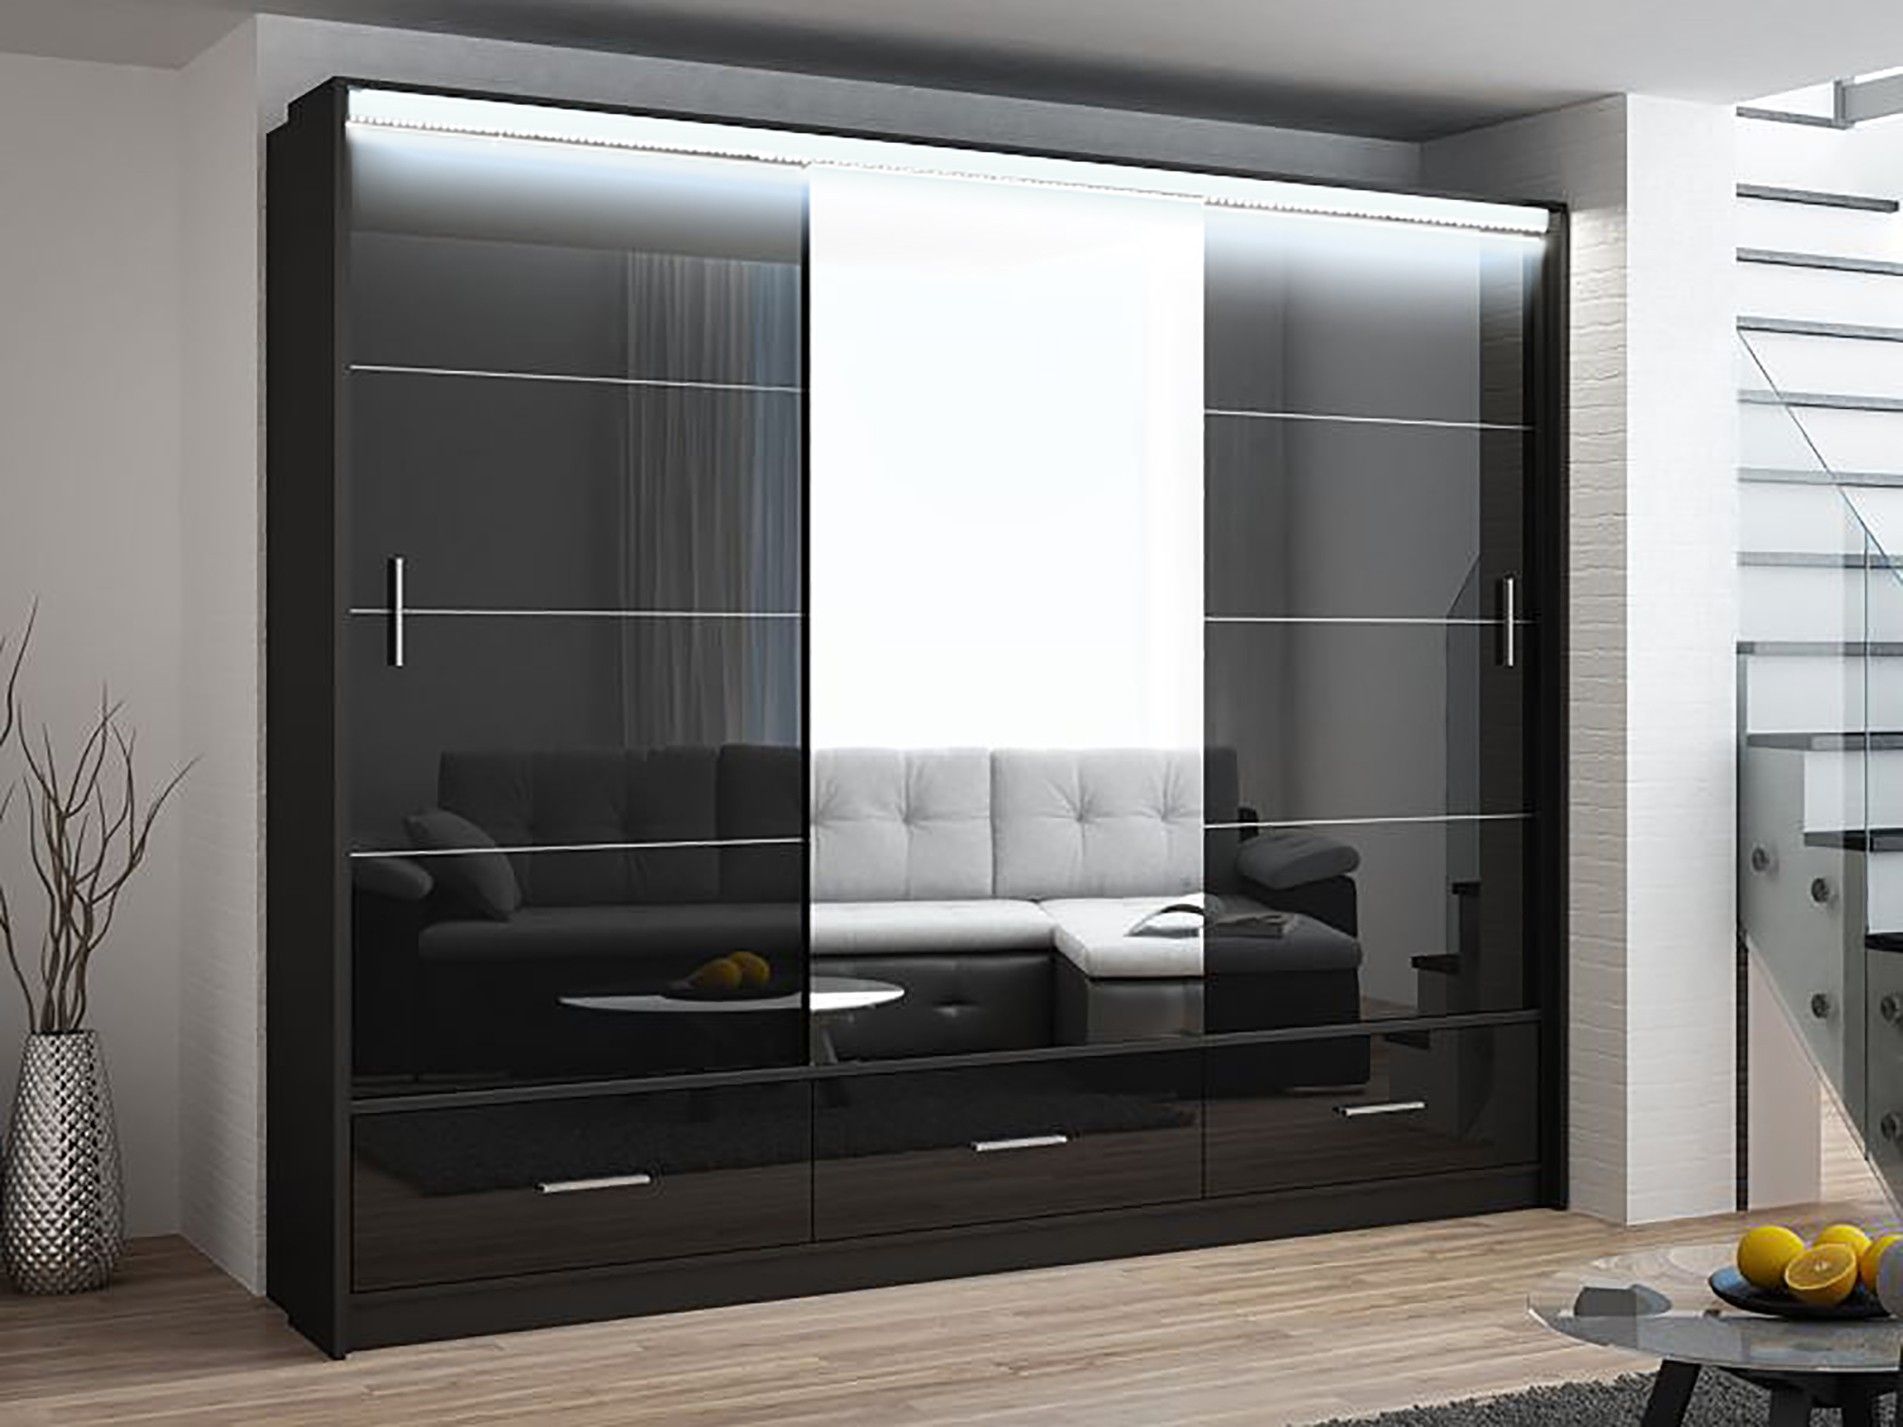 Marsylia Wardrobe, Black Gloss + Mirror 255cm ,hull Furniture With Regard To Black Gloss Mirror Wardrobes (View 3 of 15)